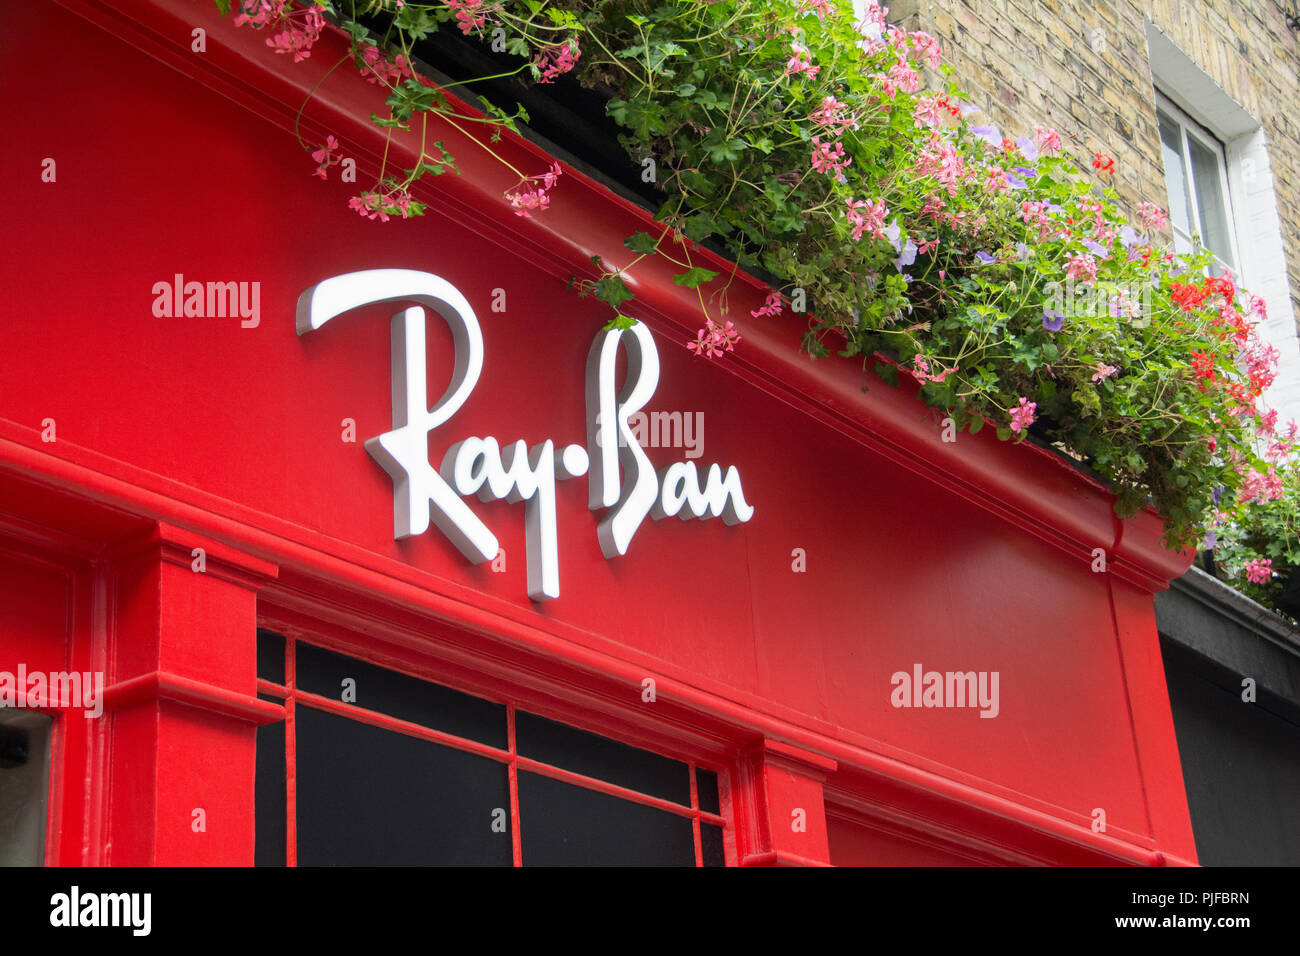 ray ban shop london